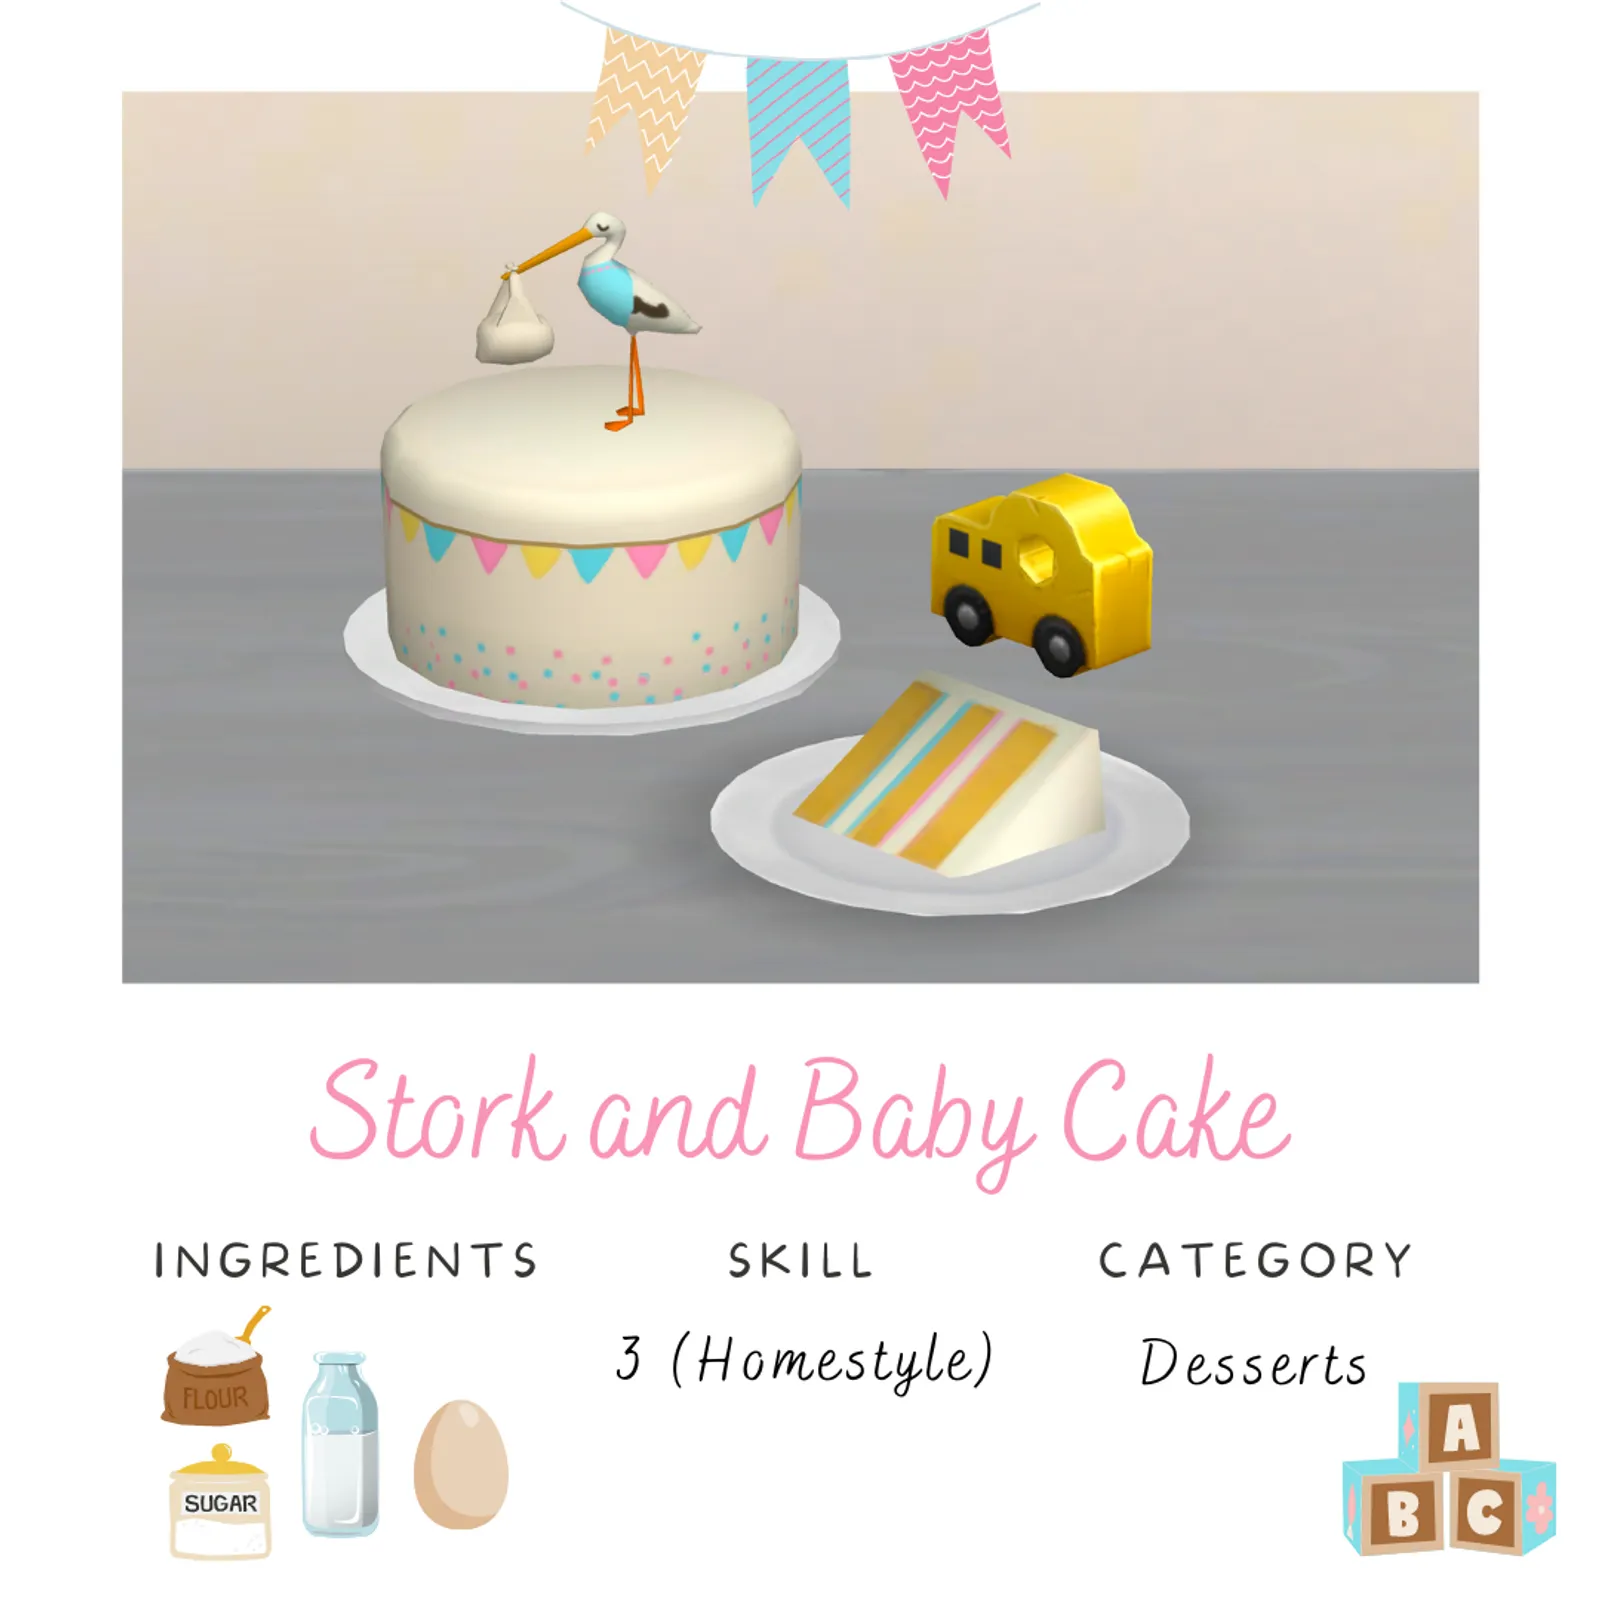 Stork and Baby Cake